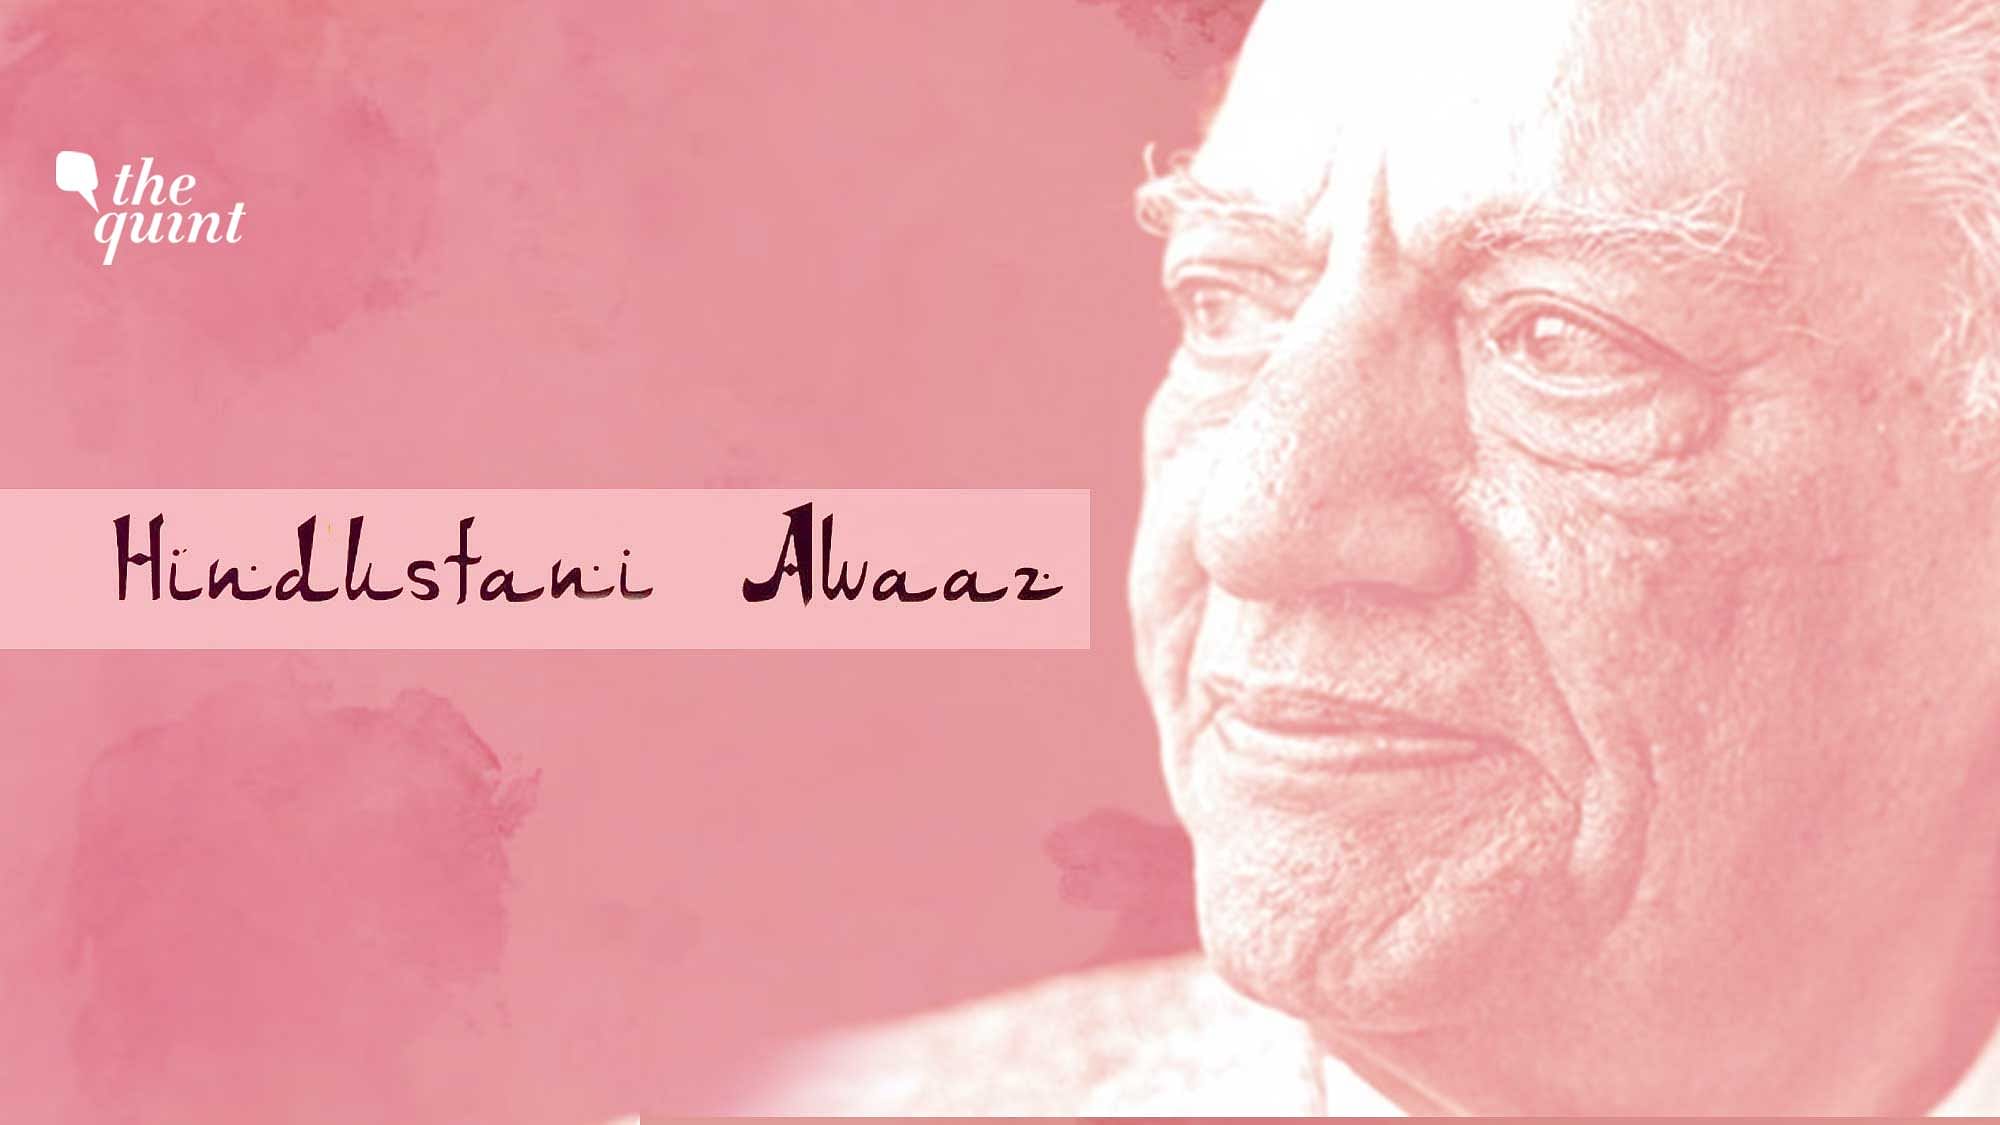 Image of Pakistani poet Faiz Ahmad Faiz used for representational purposes.